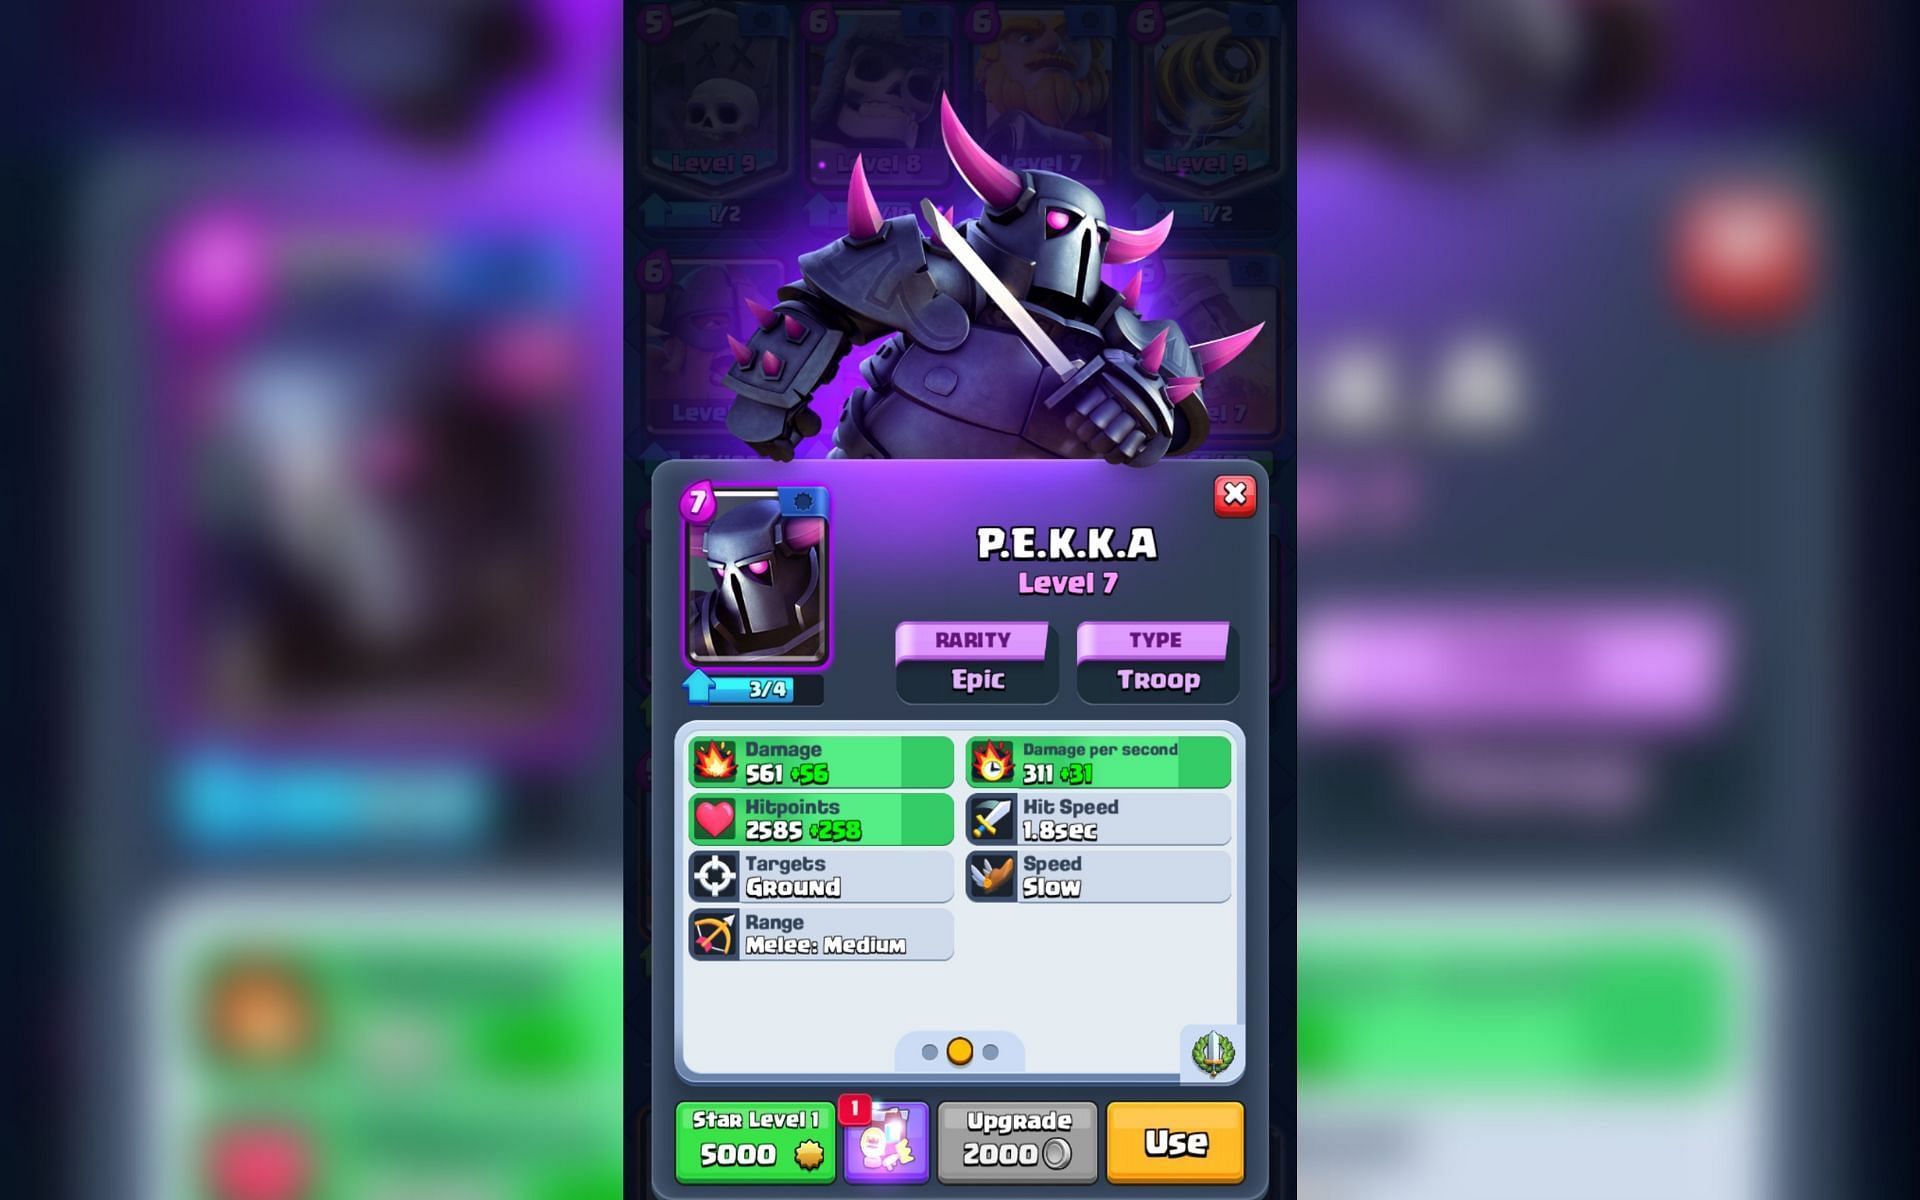 The Pekka card (Image via Sportskeeda)